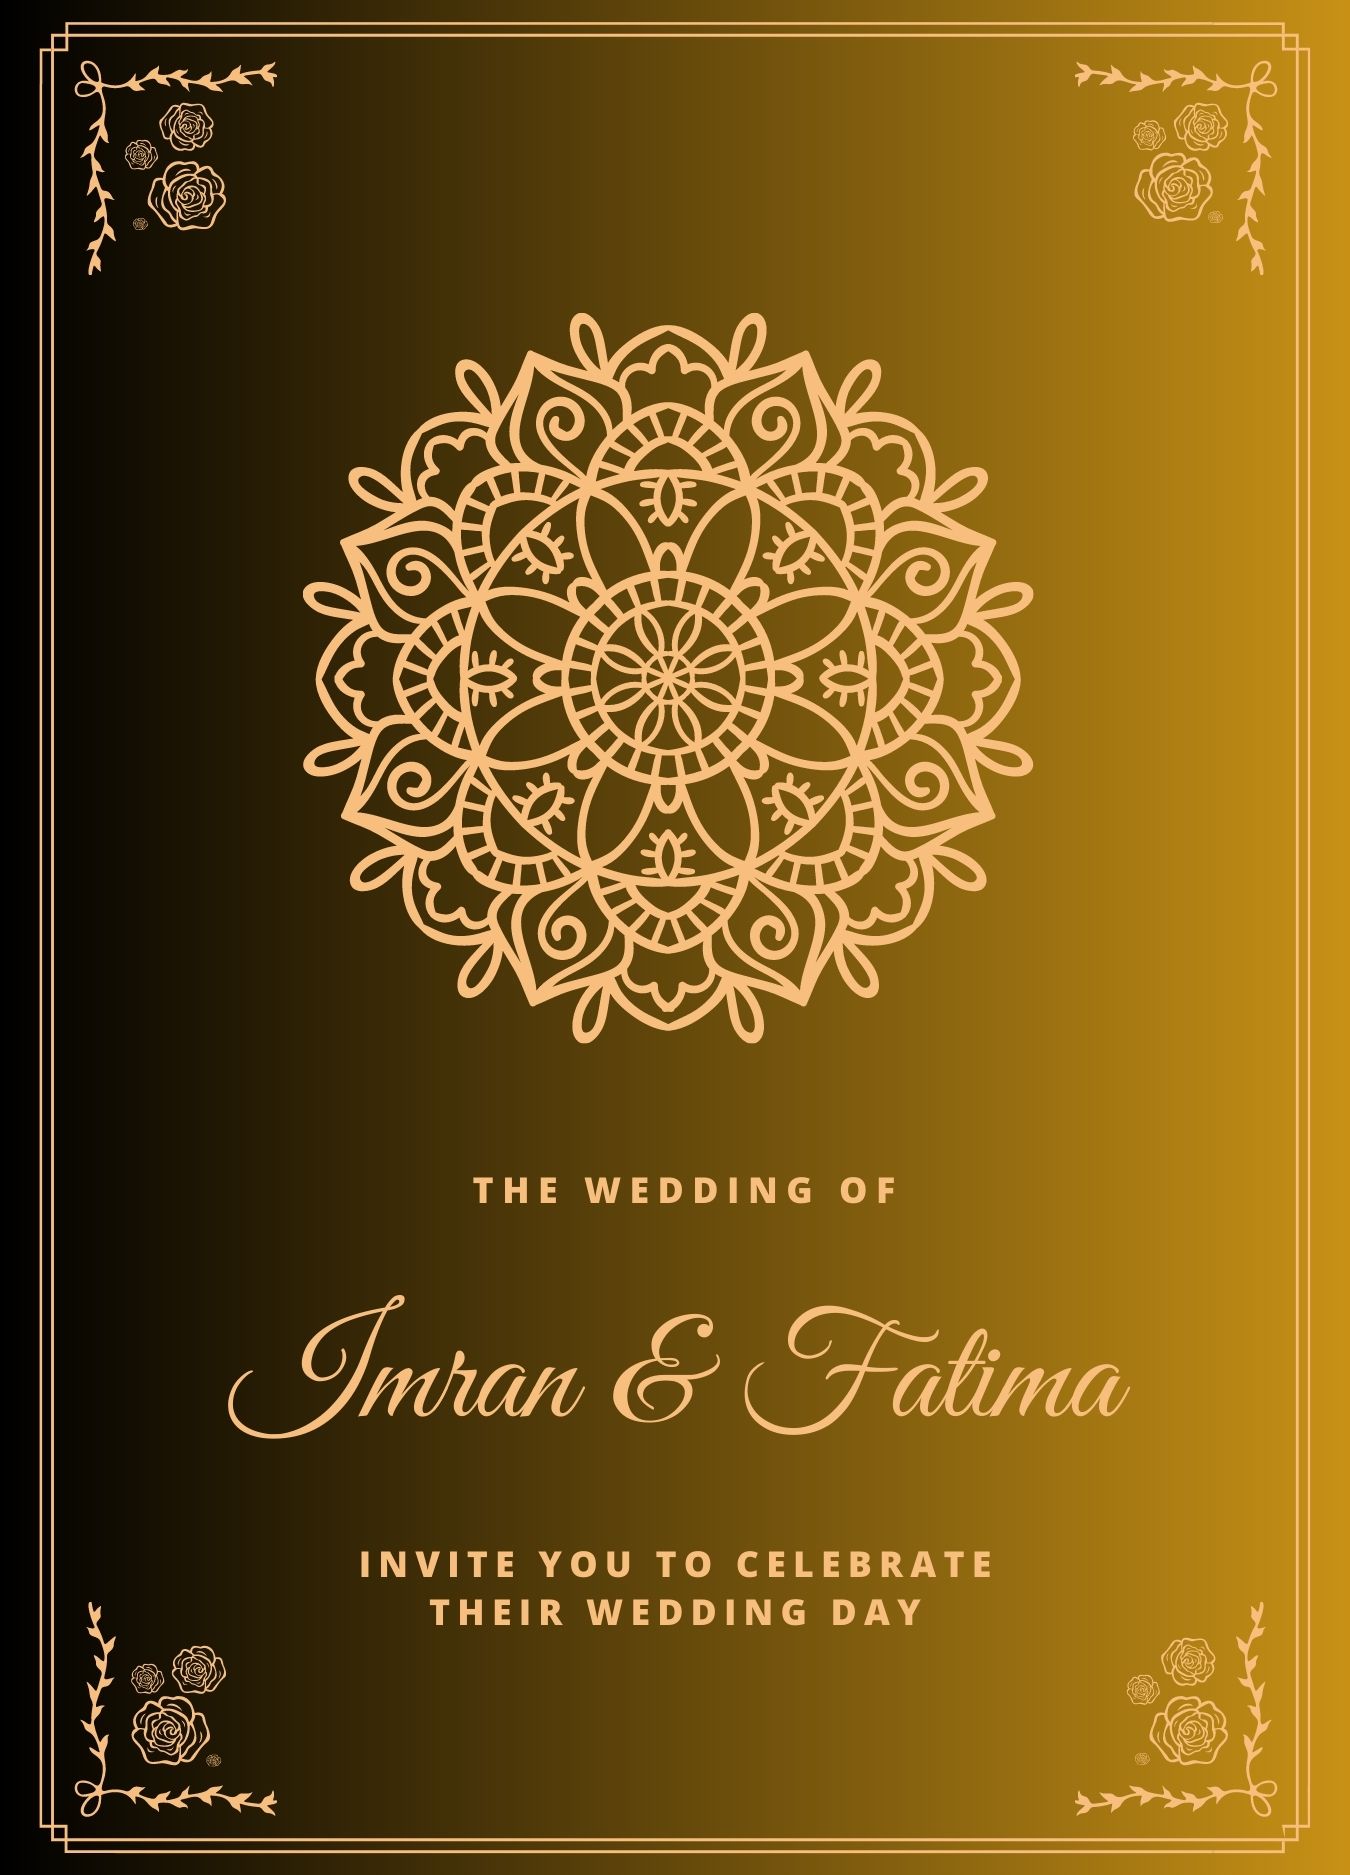 Muslim_wedding_invitation_Card_golden_1